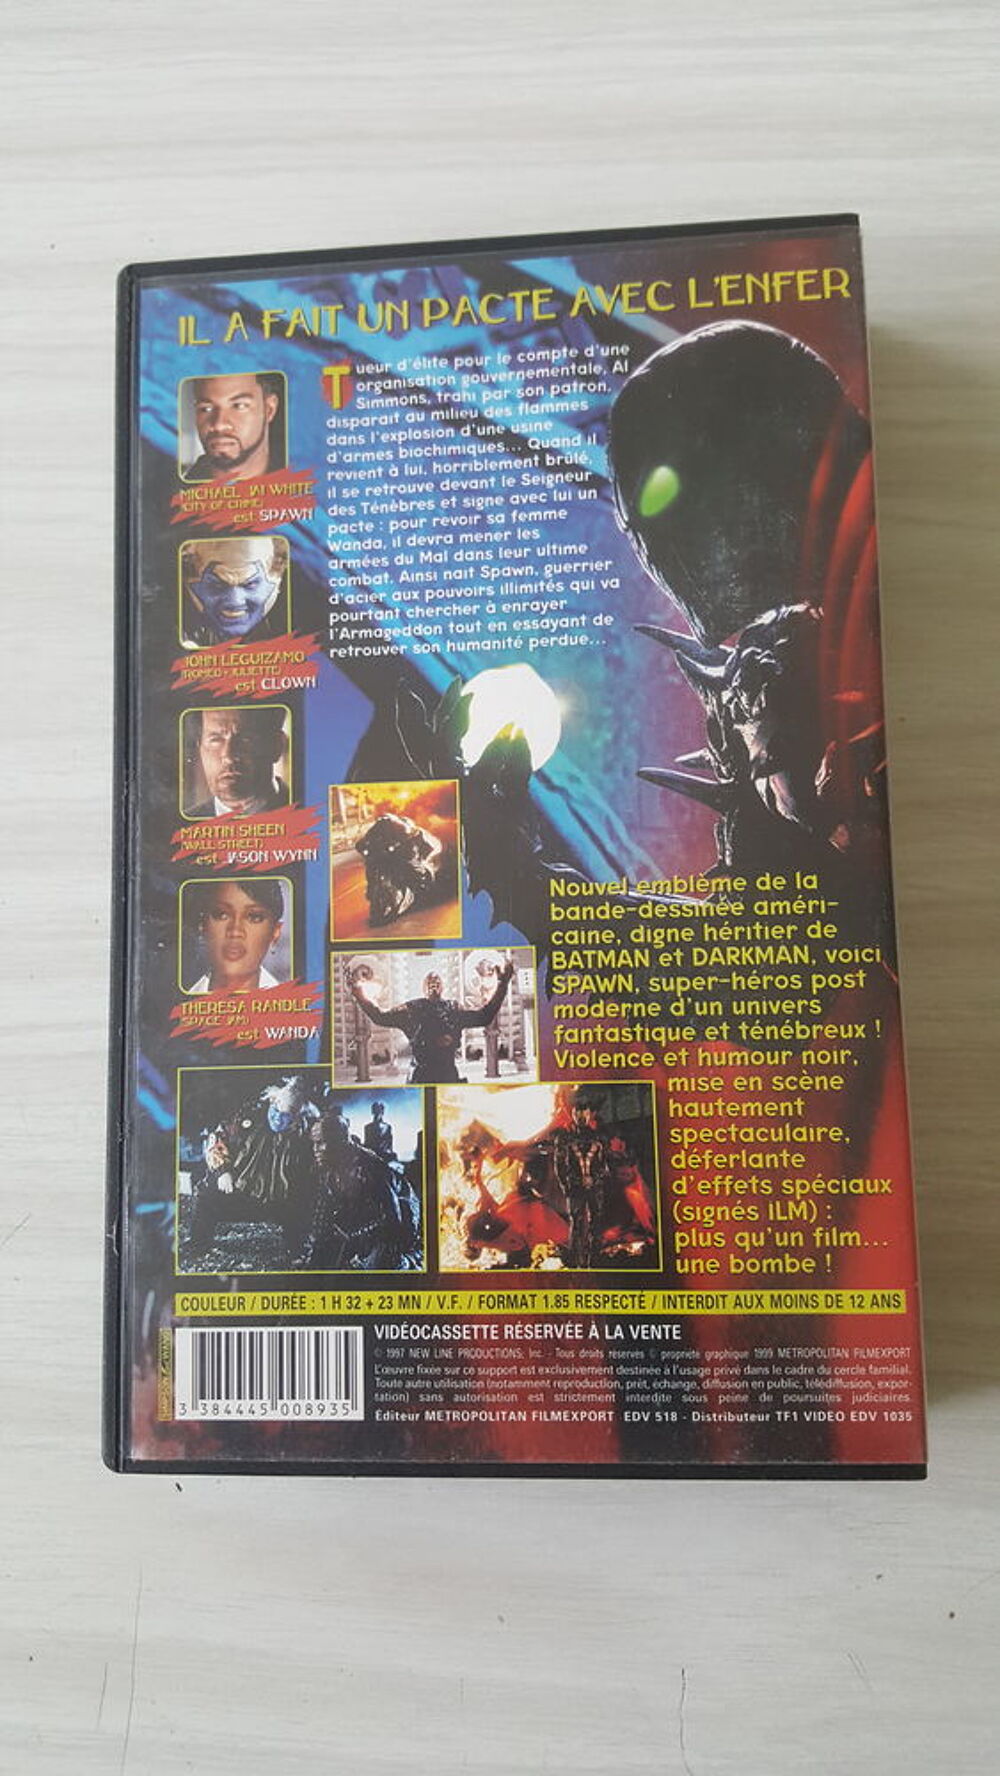 K7 VIDEO VHS SPAWN DVD et blu-ray